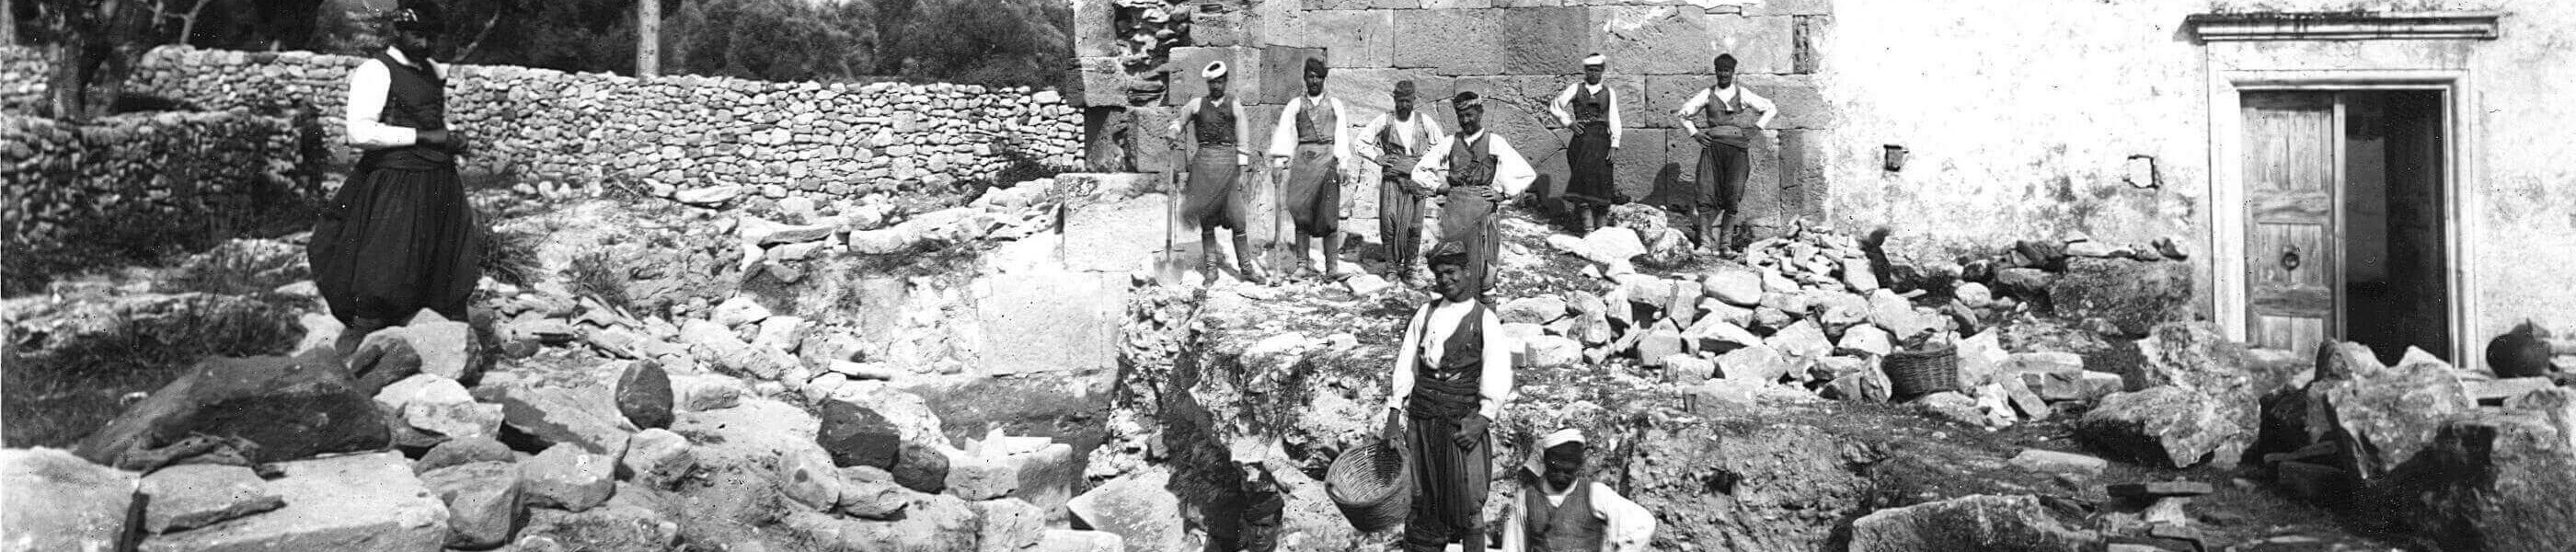 Gortyn excavations, 1910 circa